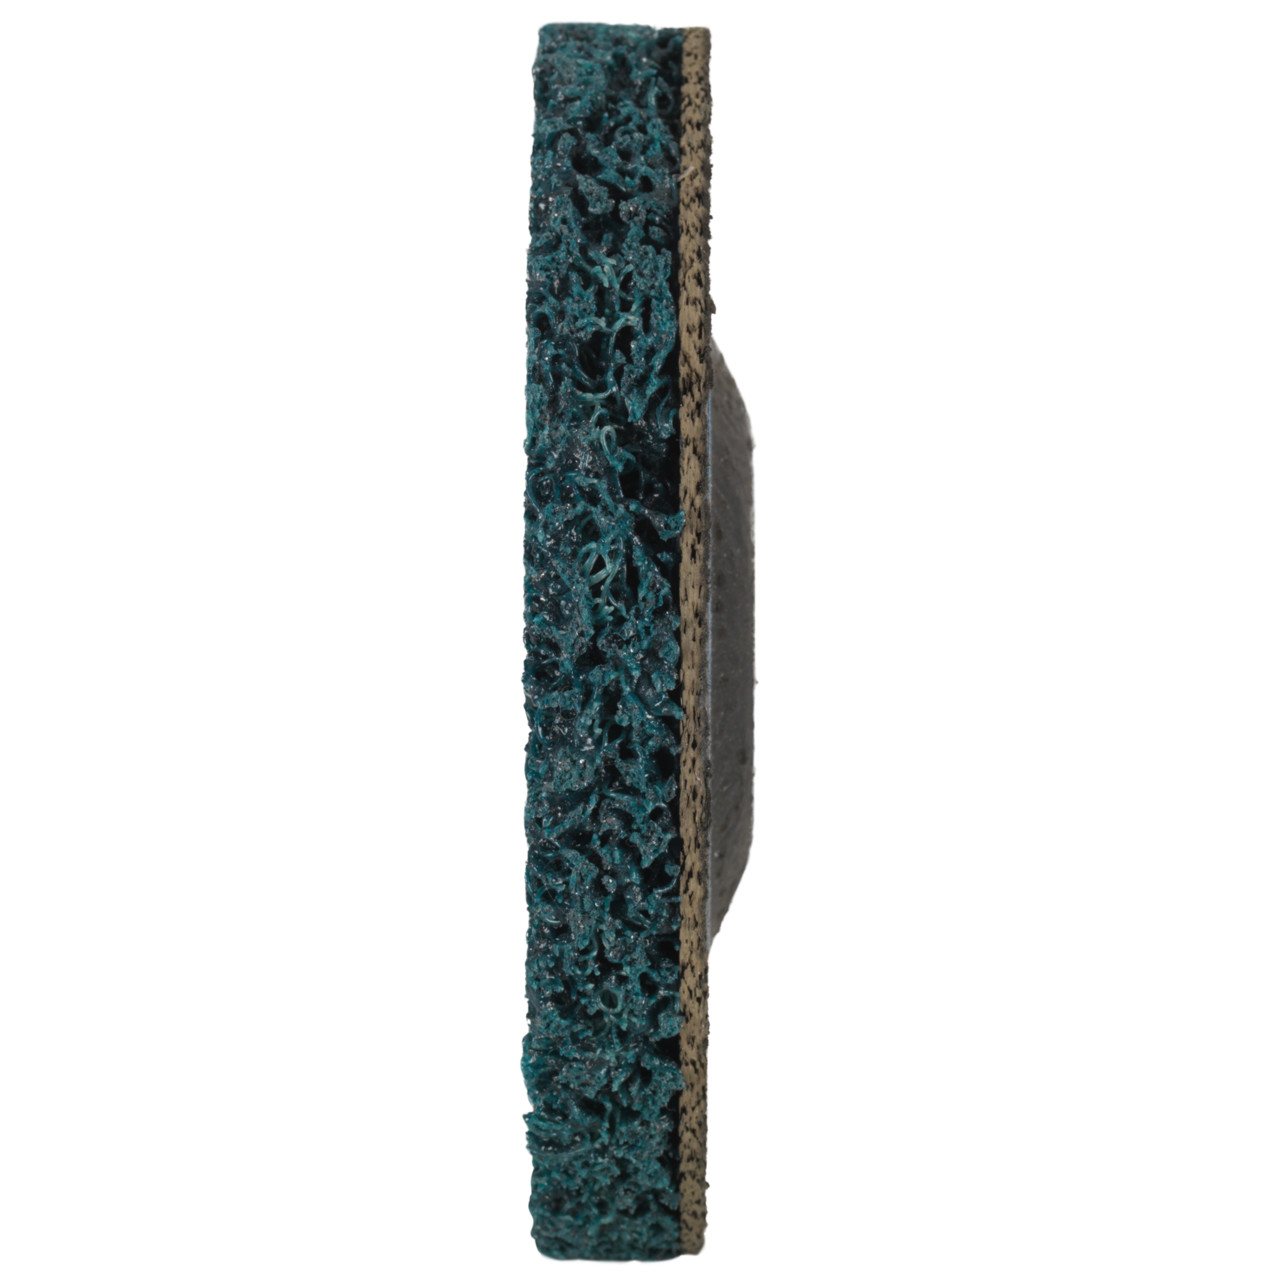 Tyrolit Grove reinigingsschijf DxH 178x22,2 Universeel toepasbaar, C GROB, vorm: 28- (grove reinigingsschijf), Art. 898018